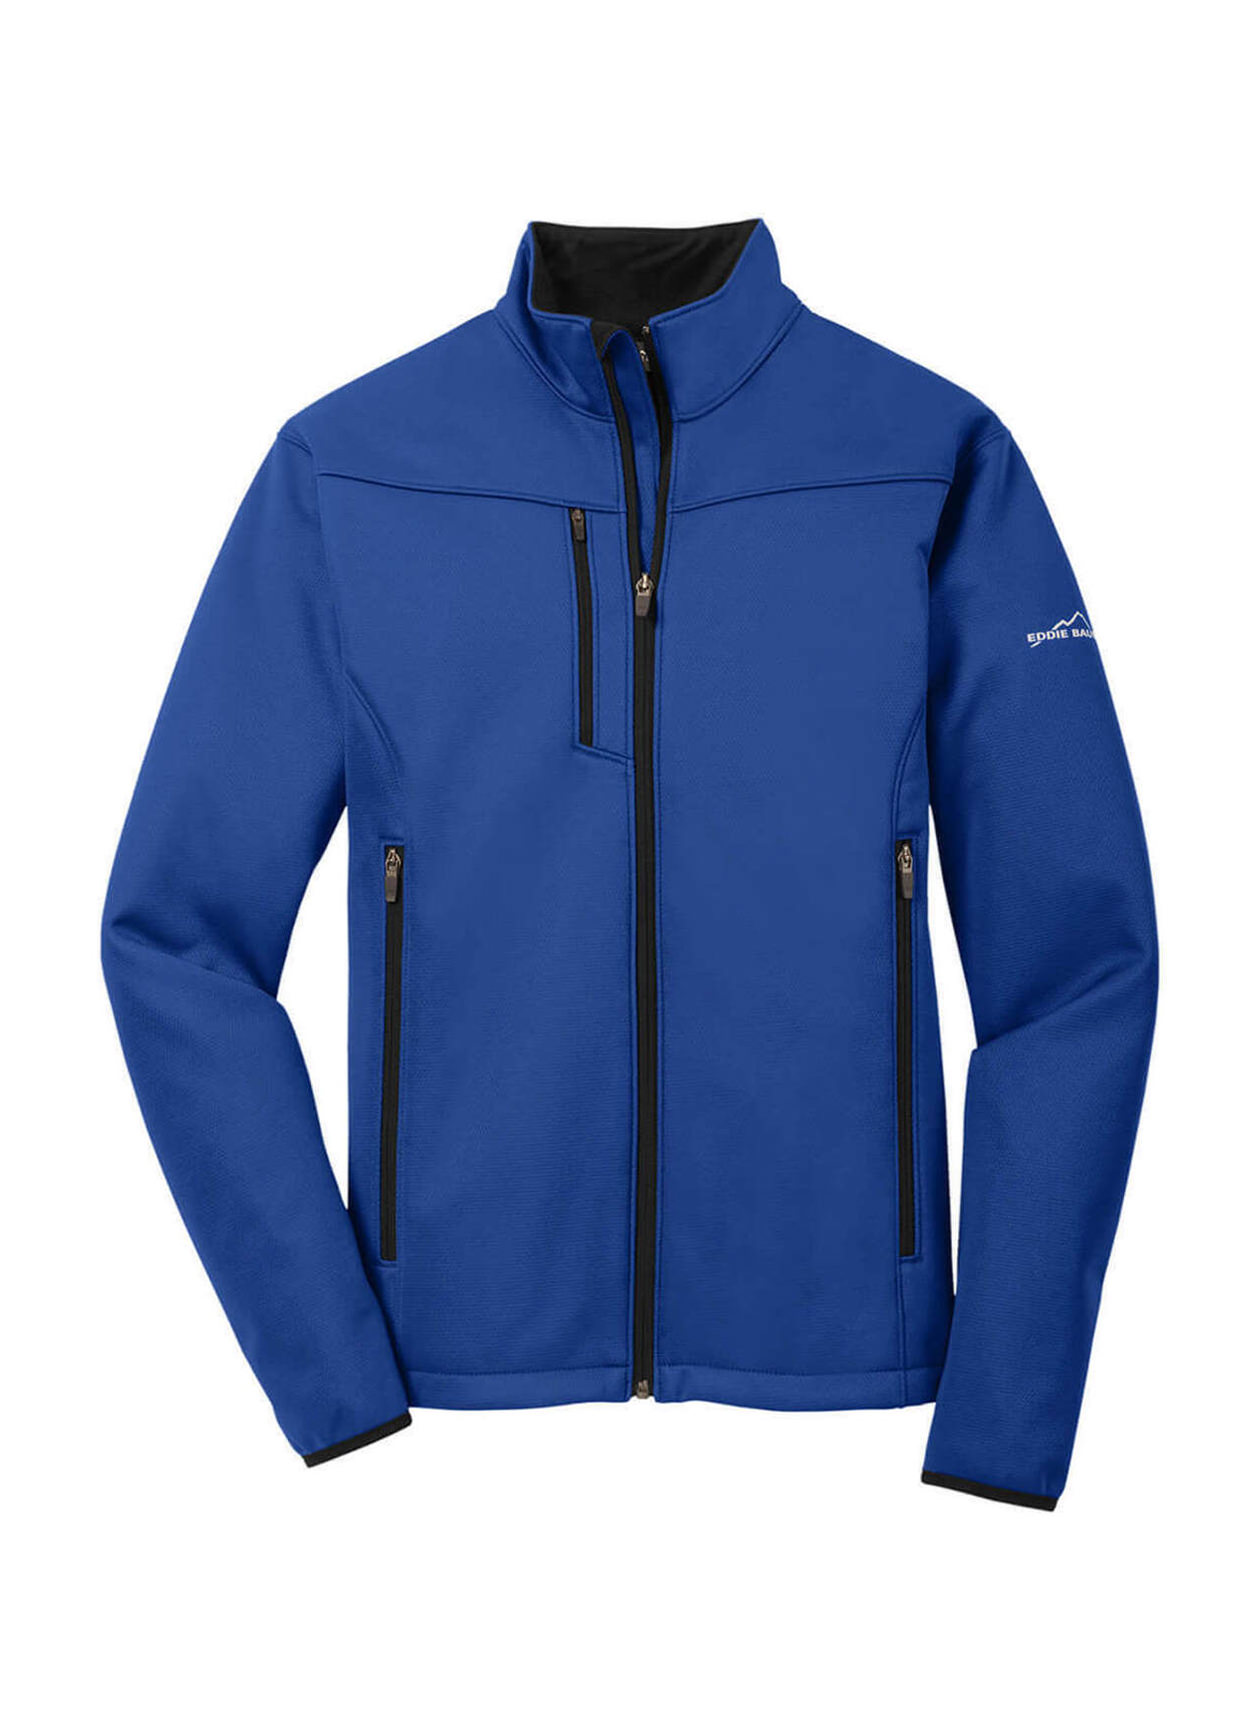 Eddie Bauer Men's Cobalt Blue Weather-Resist Soft Shell Jacket